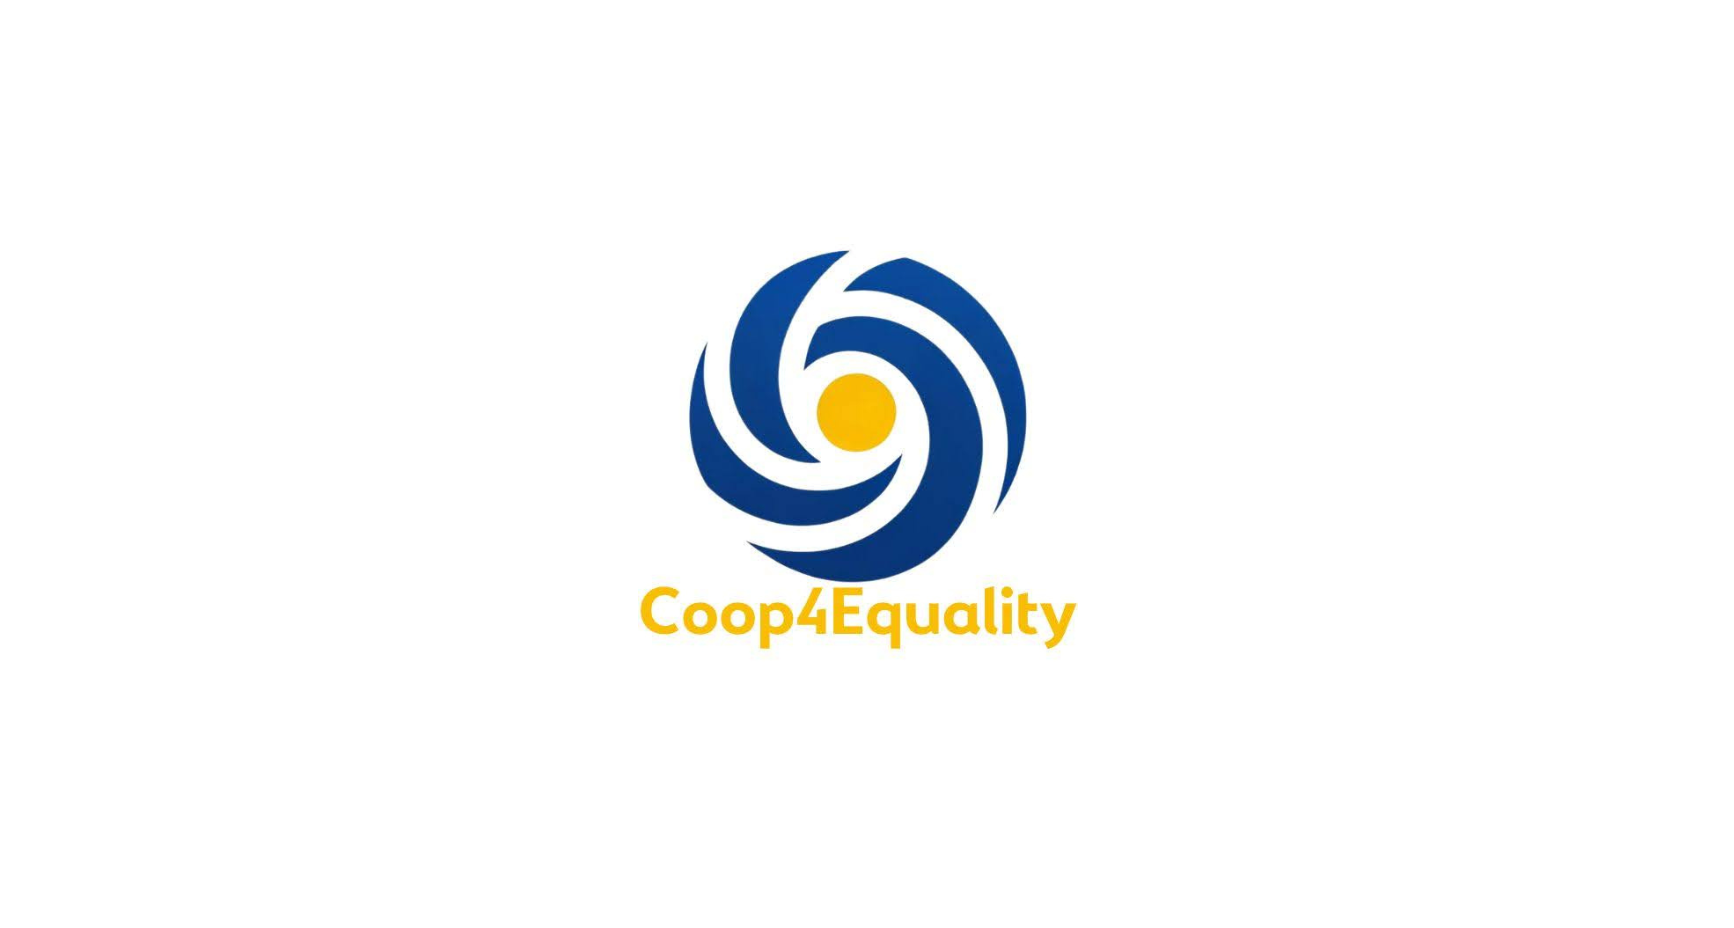 Coop4Equality bandeau